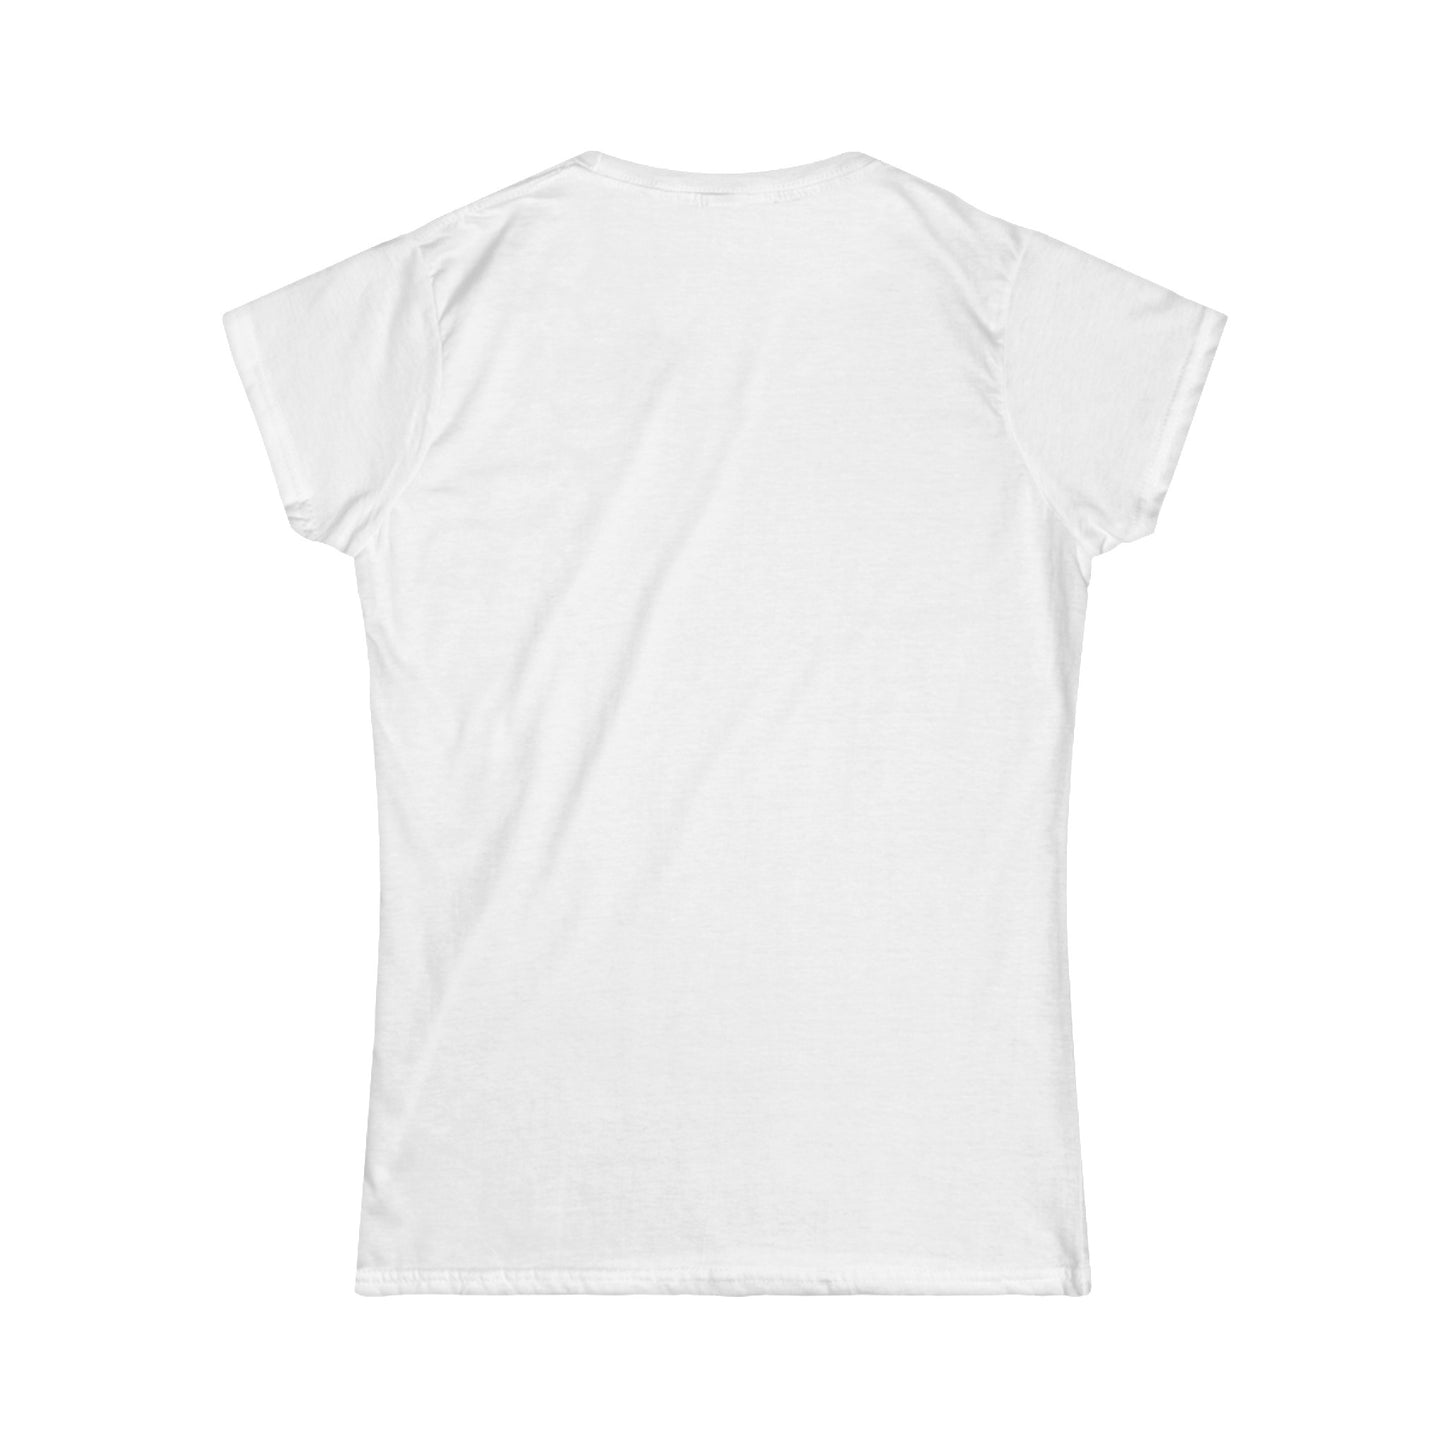 MON CHERE (Women's T-shirt)